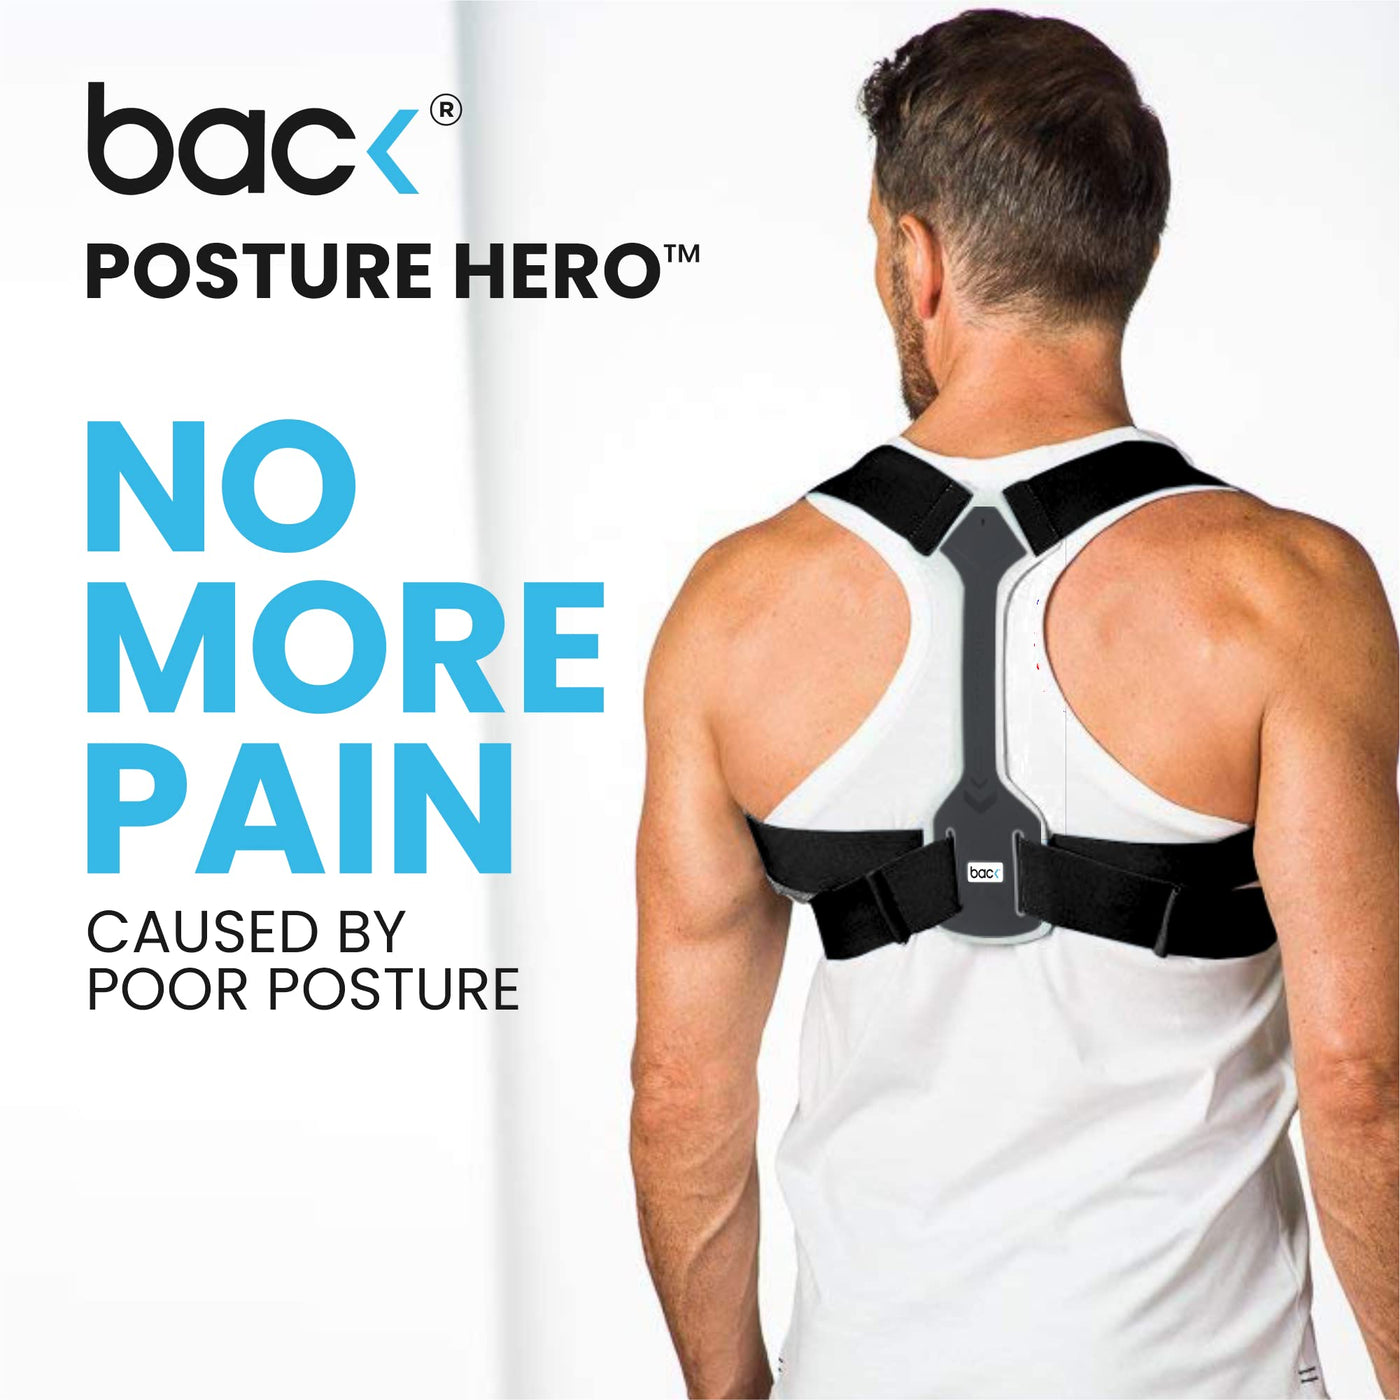 BACK Posture Hero™ Sports for Men & Women - Award Winning Posture Support  (Black/Charcoal Grey, Large)